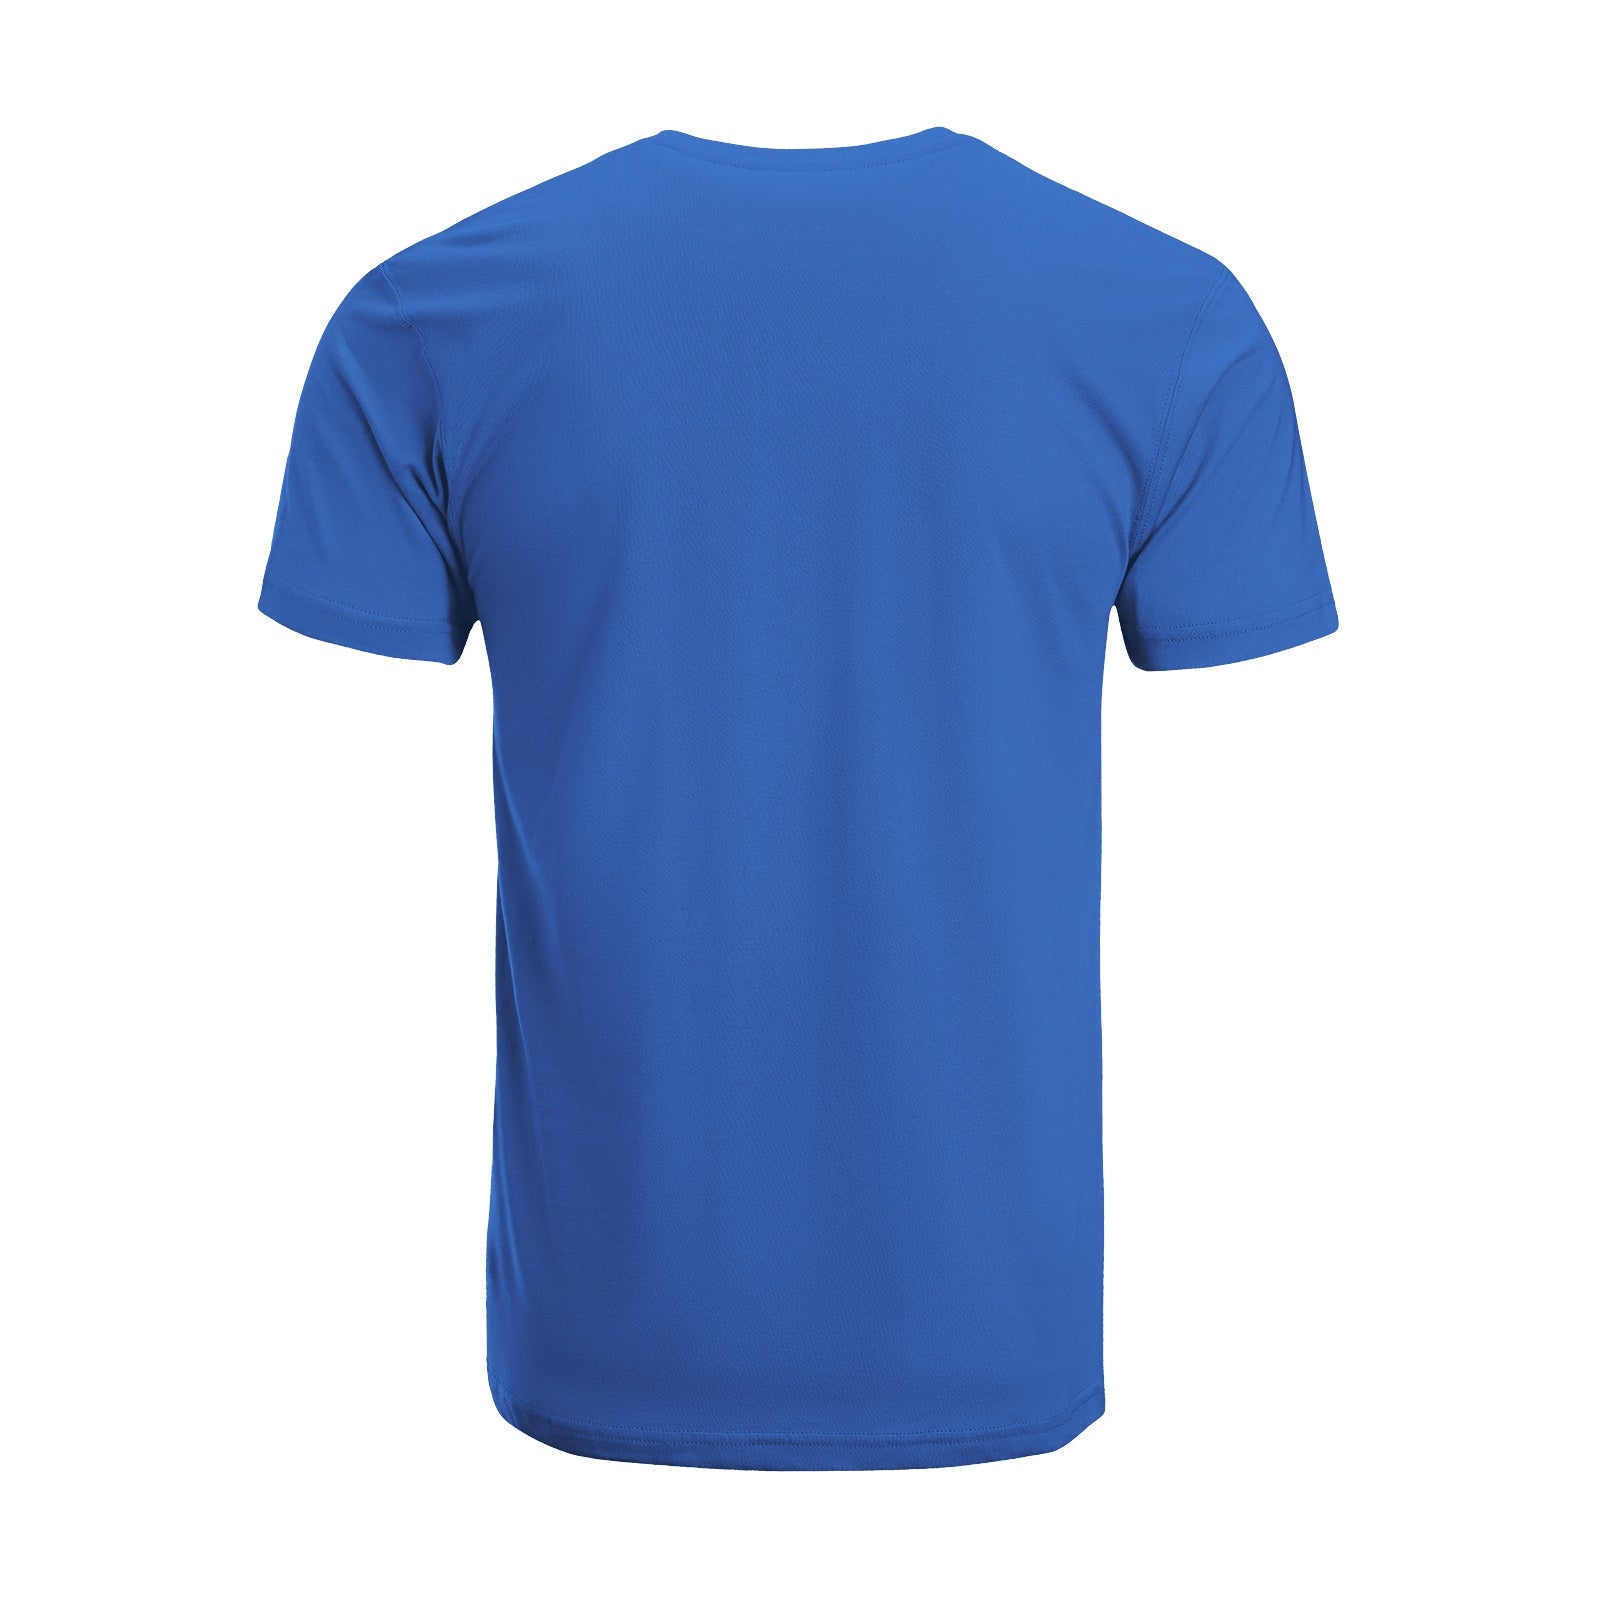 Unisex Short Sleeve Crew Neck Cotton Jersey T-Shirt Gym No. 45 - Tara-Outfits.com